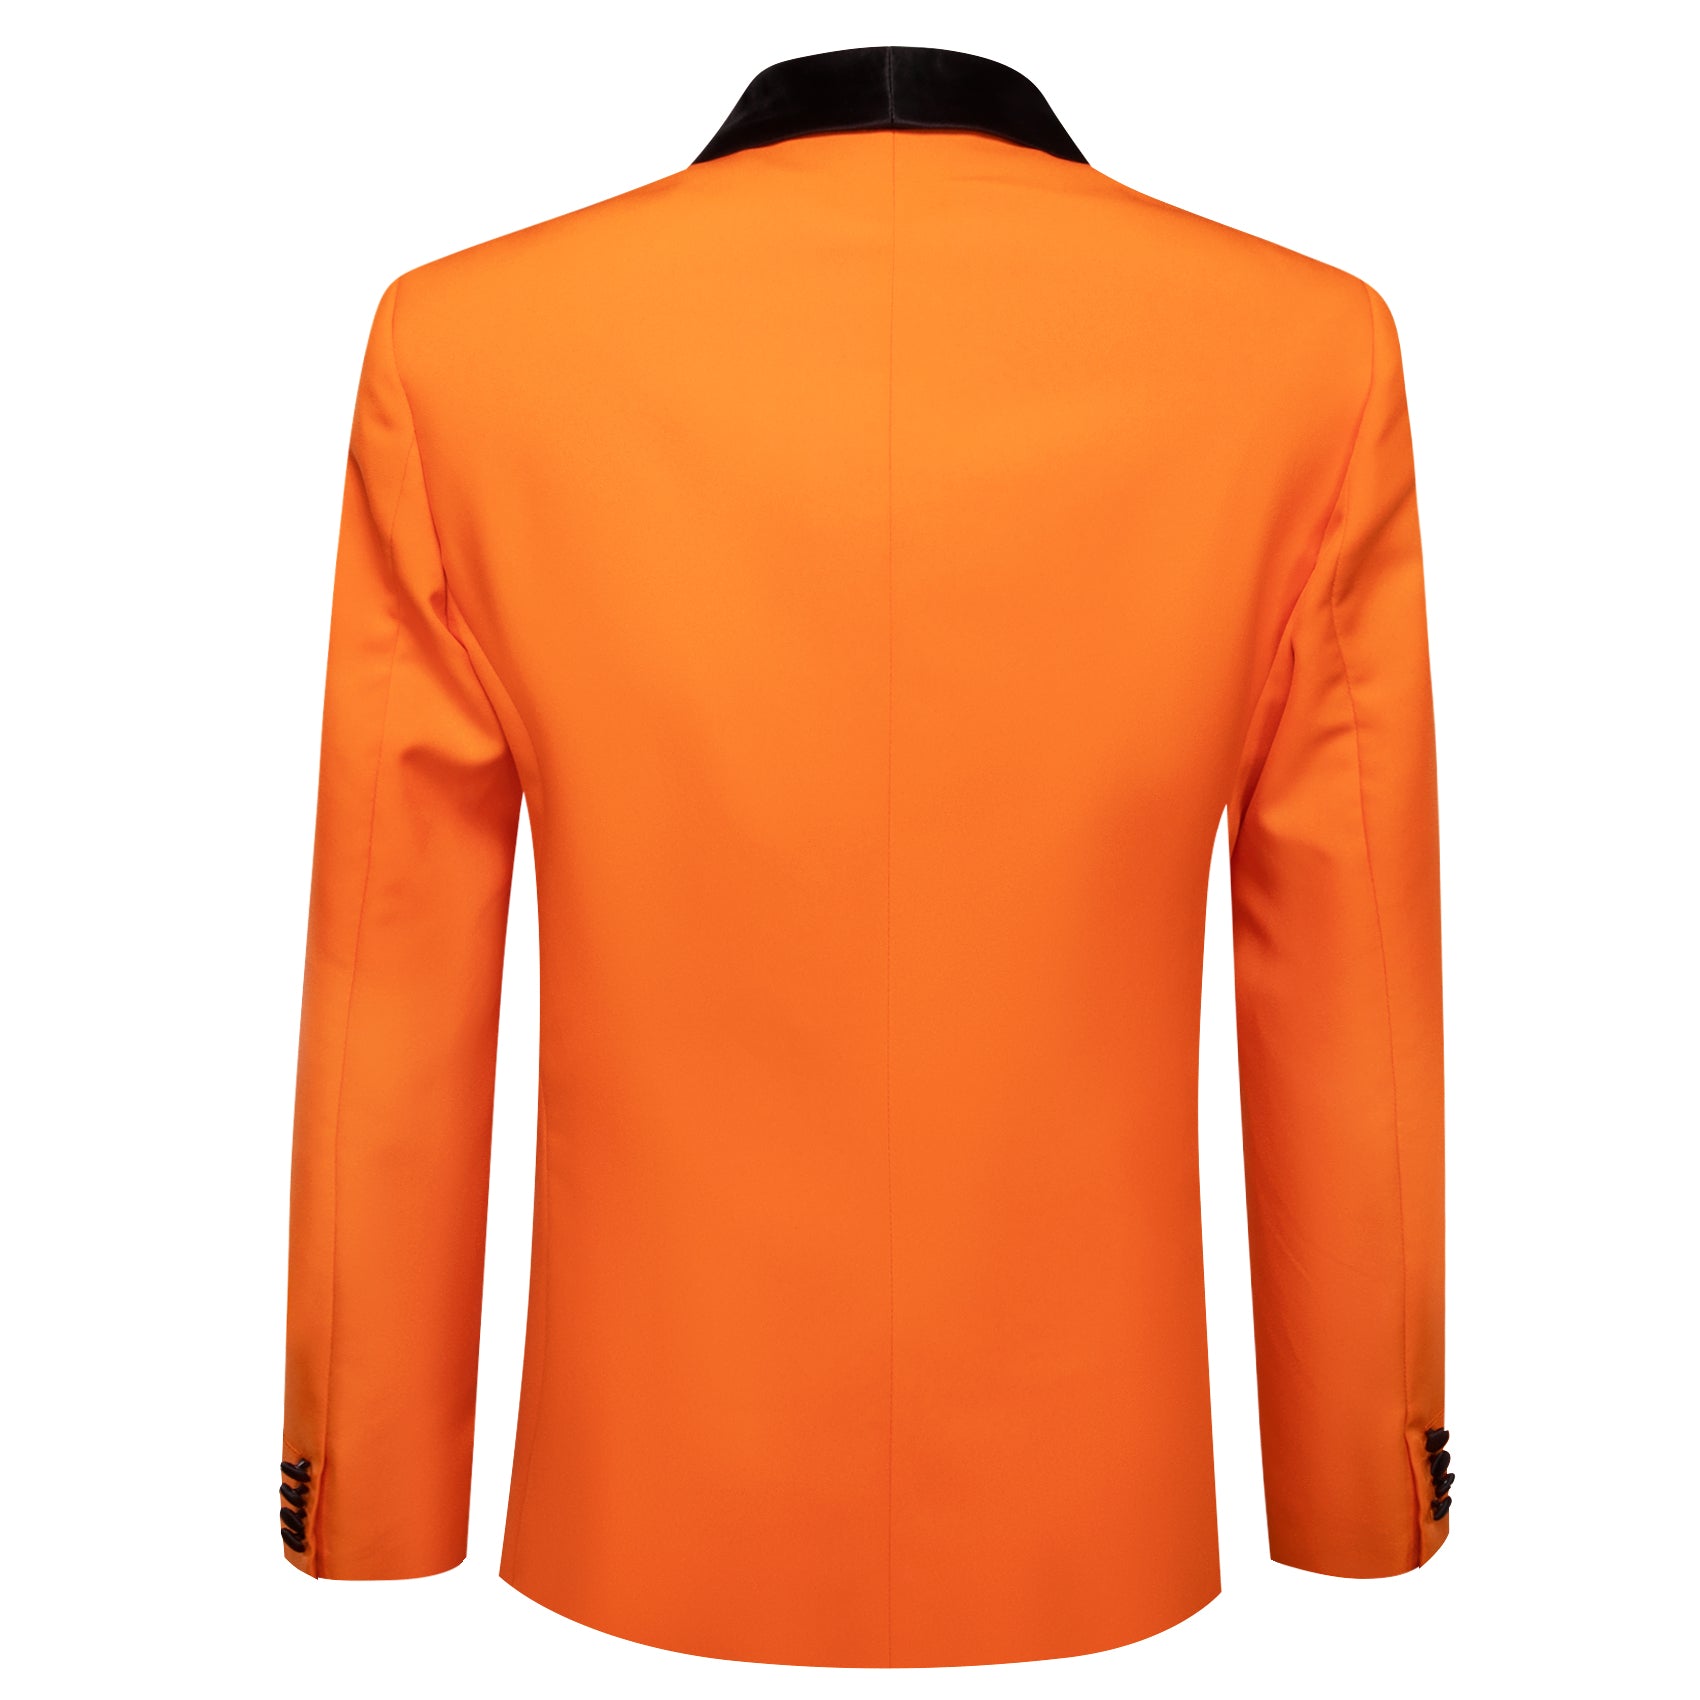 Men's Dress Orange Solid Suit Jacket Slim One Button Stylish Blazer